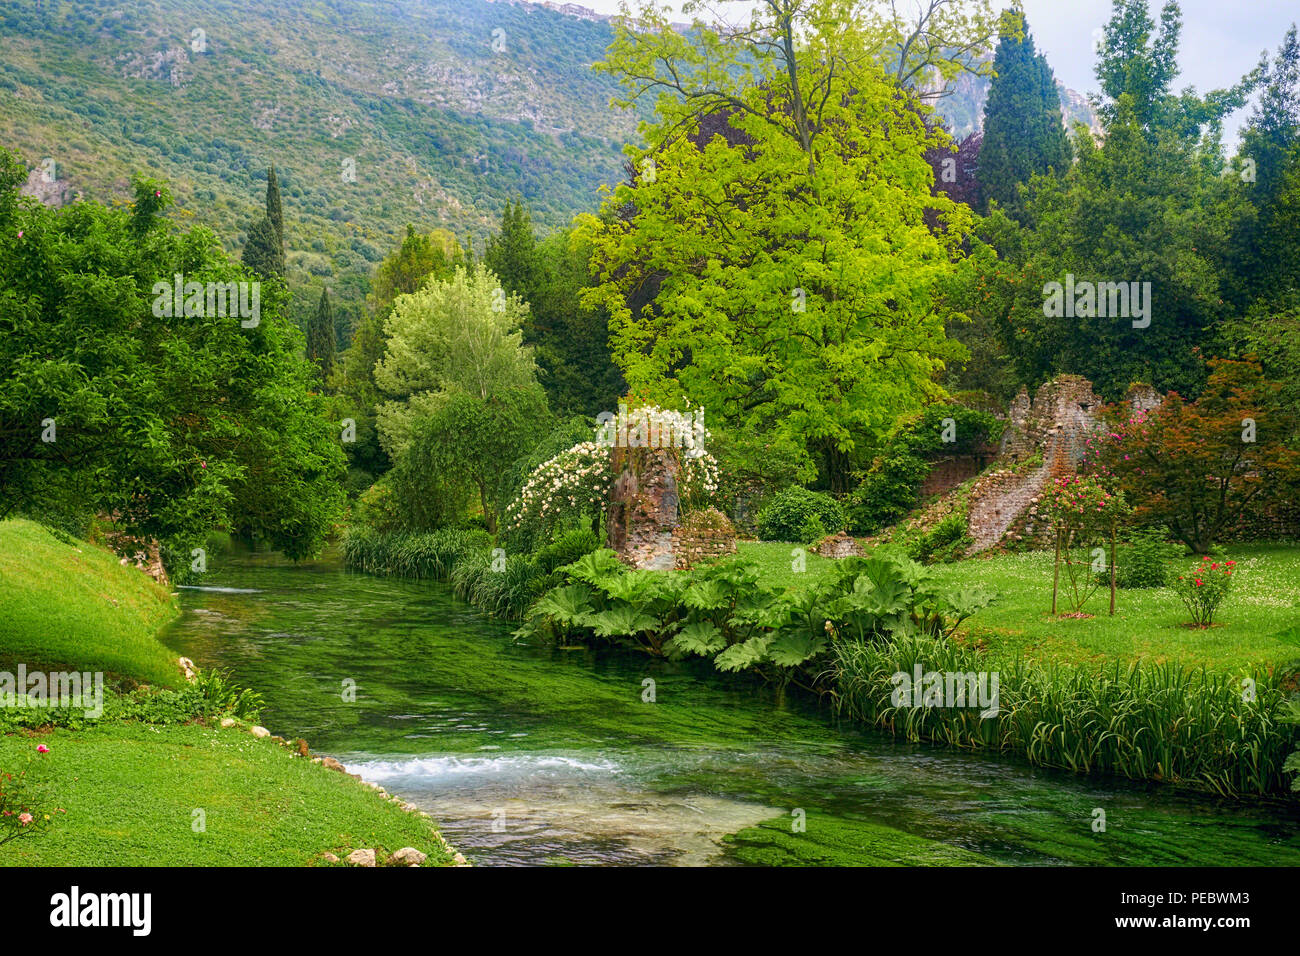 Jardin luxuriant avec un ruisseau et ruines historiques, Jardin Ninfa, Cisterna di Latina, Italie Banque D'Images